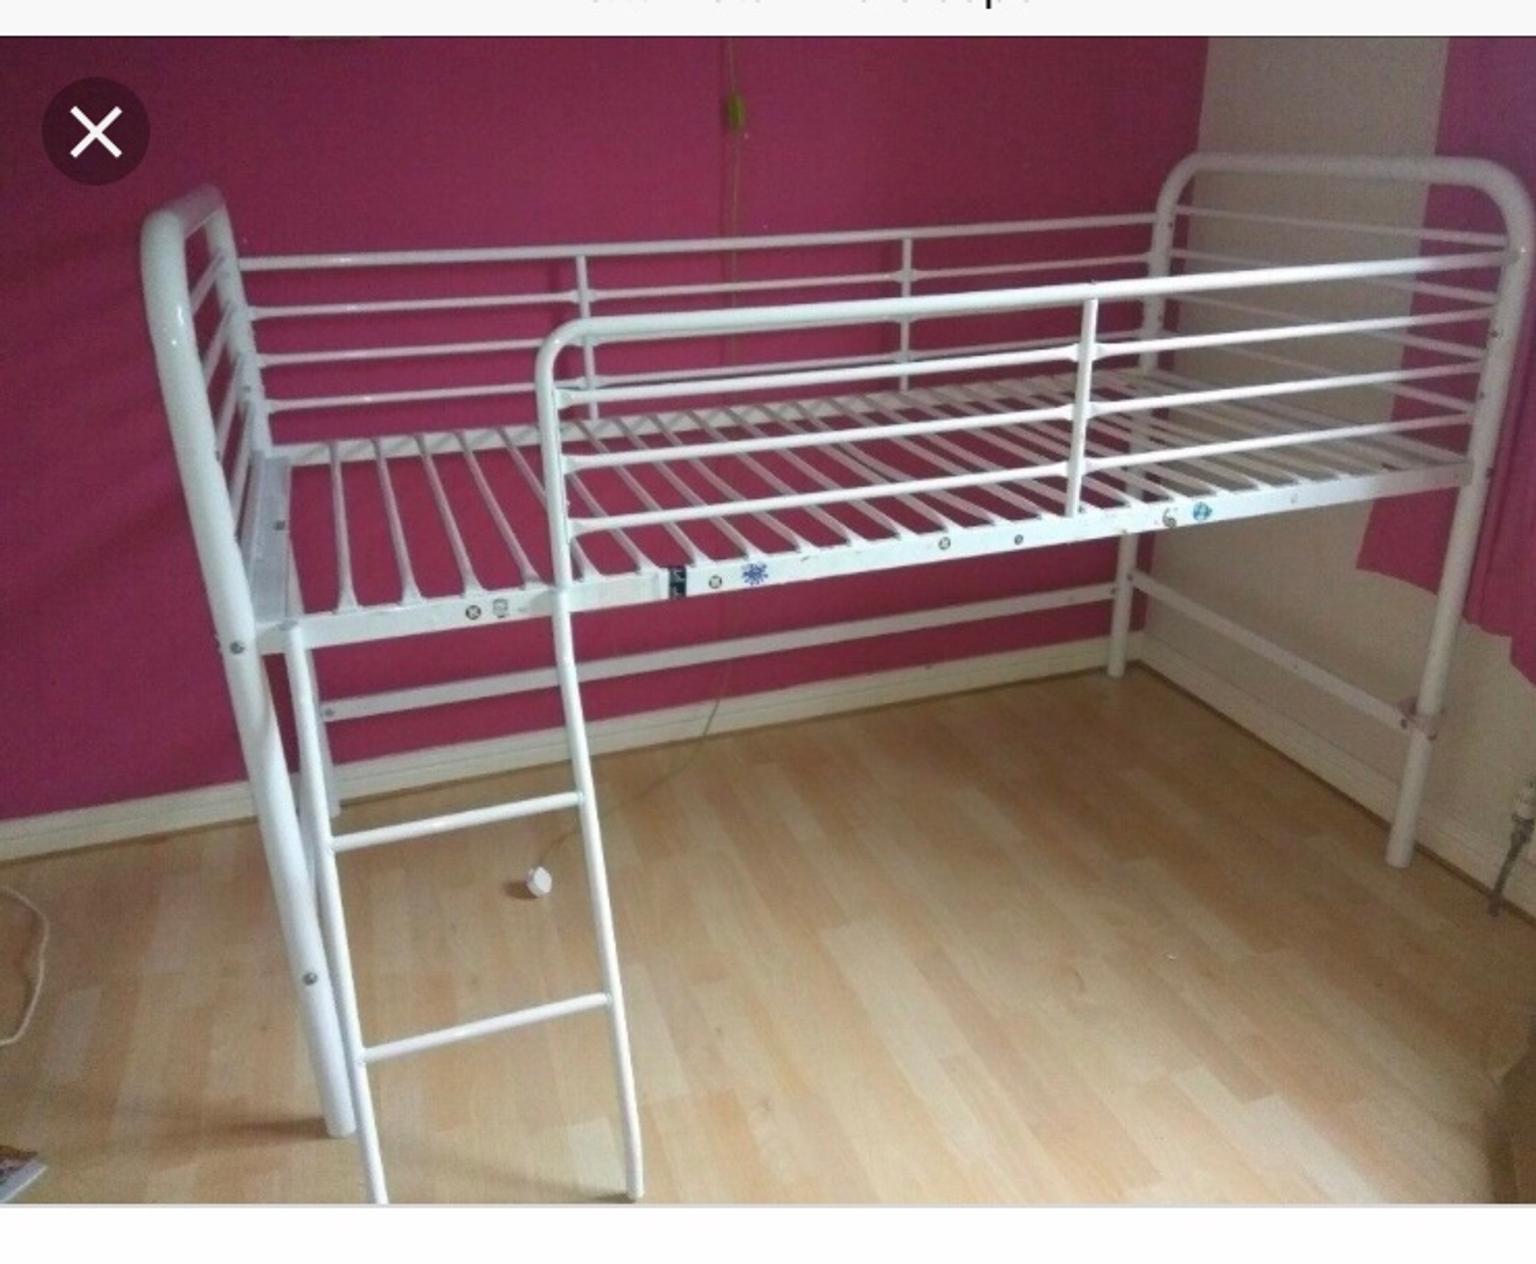 white metal mid sleeper bed